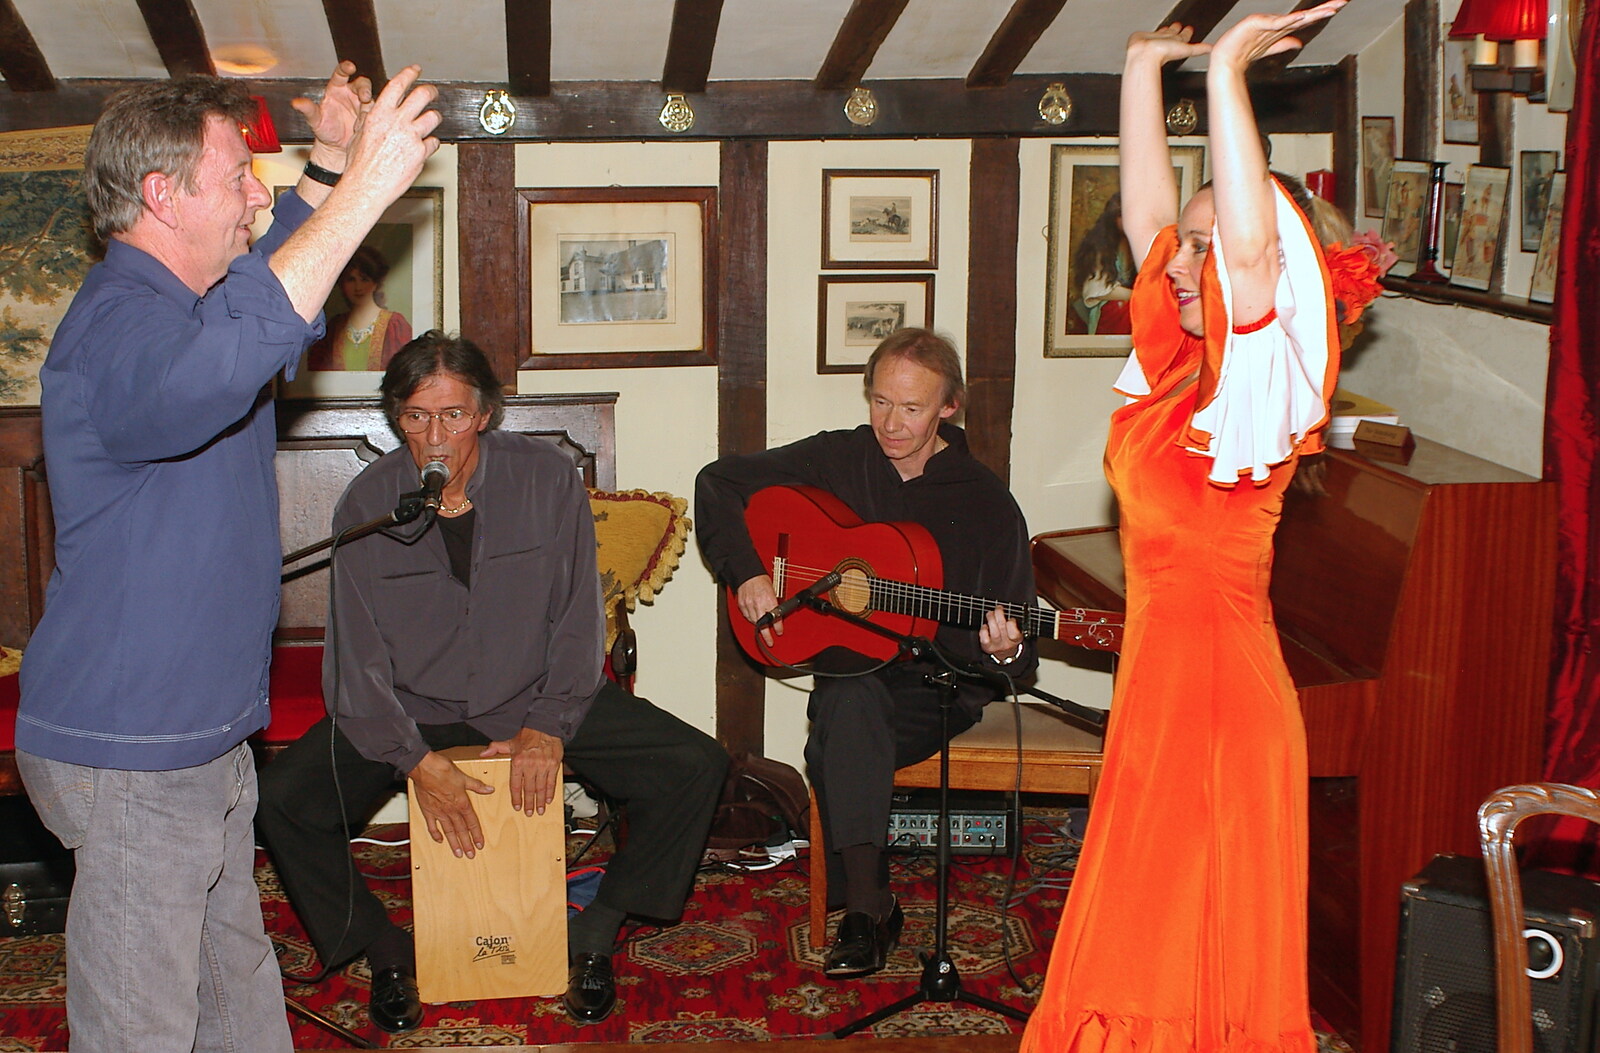 Suffolk County Council Dereliction, and Cotton Flamenco, Suffolk - 22nd October 2005: More dancing